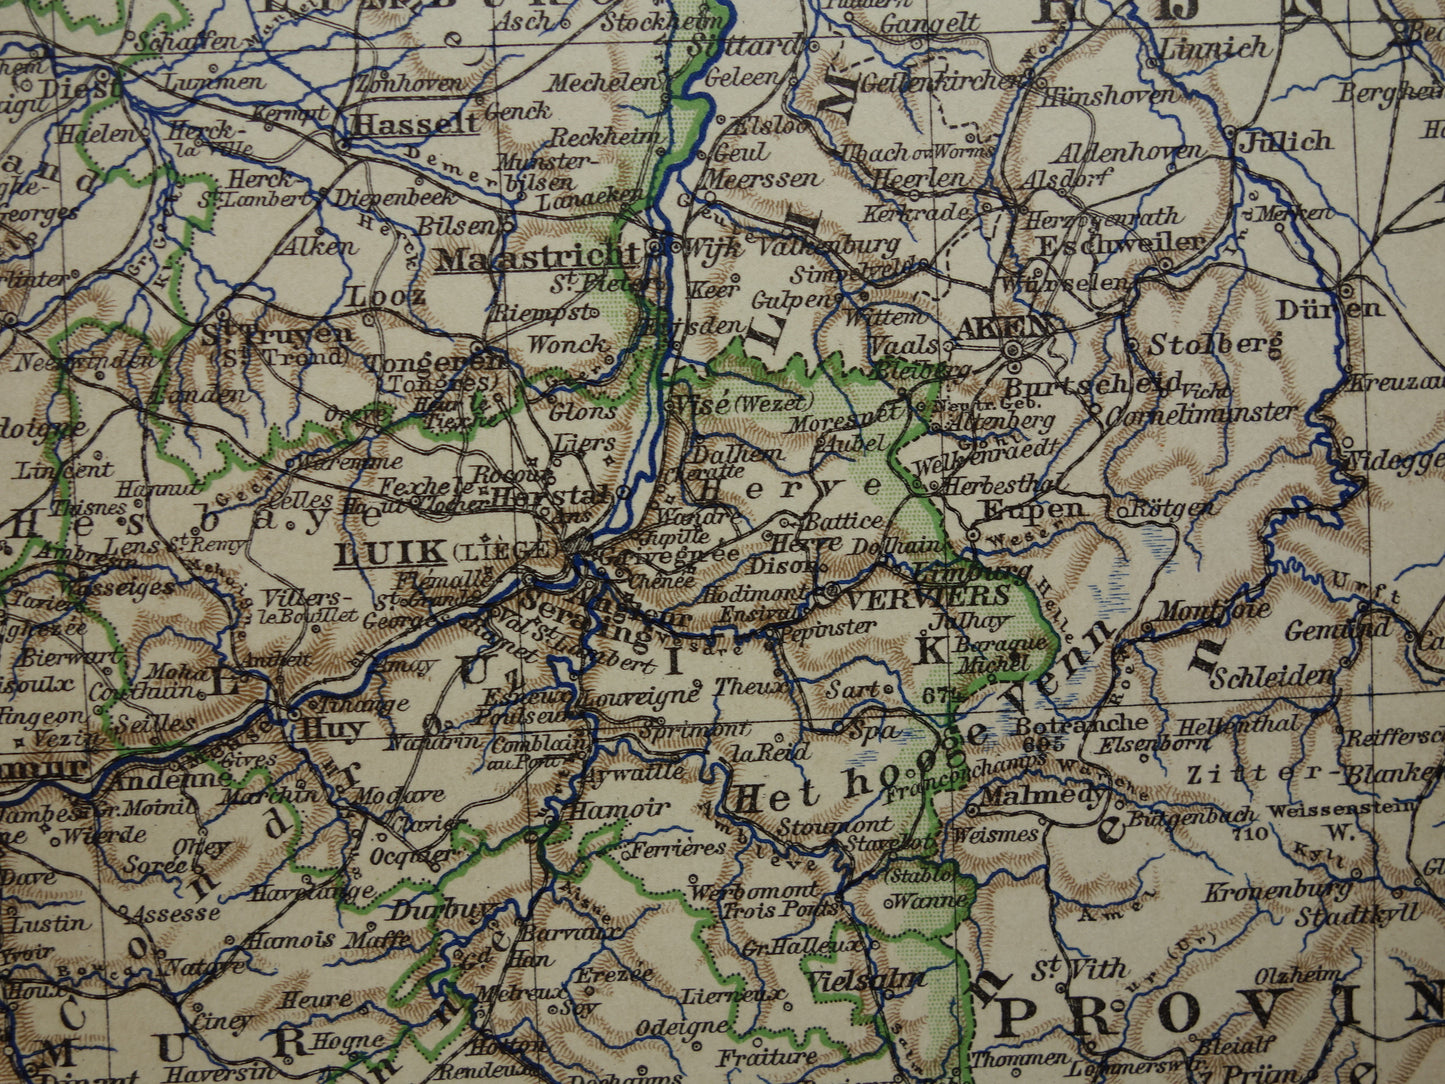 Oude kaart van België uit 1906 originele antieke Nederlandse landkaart van België